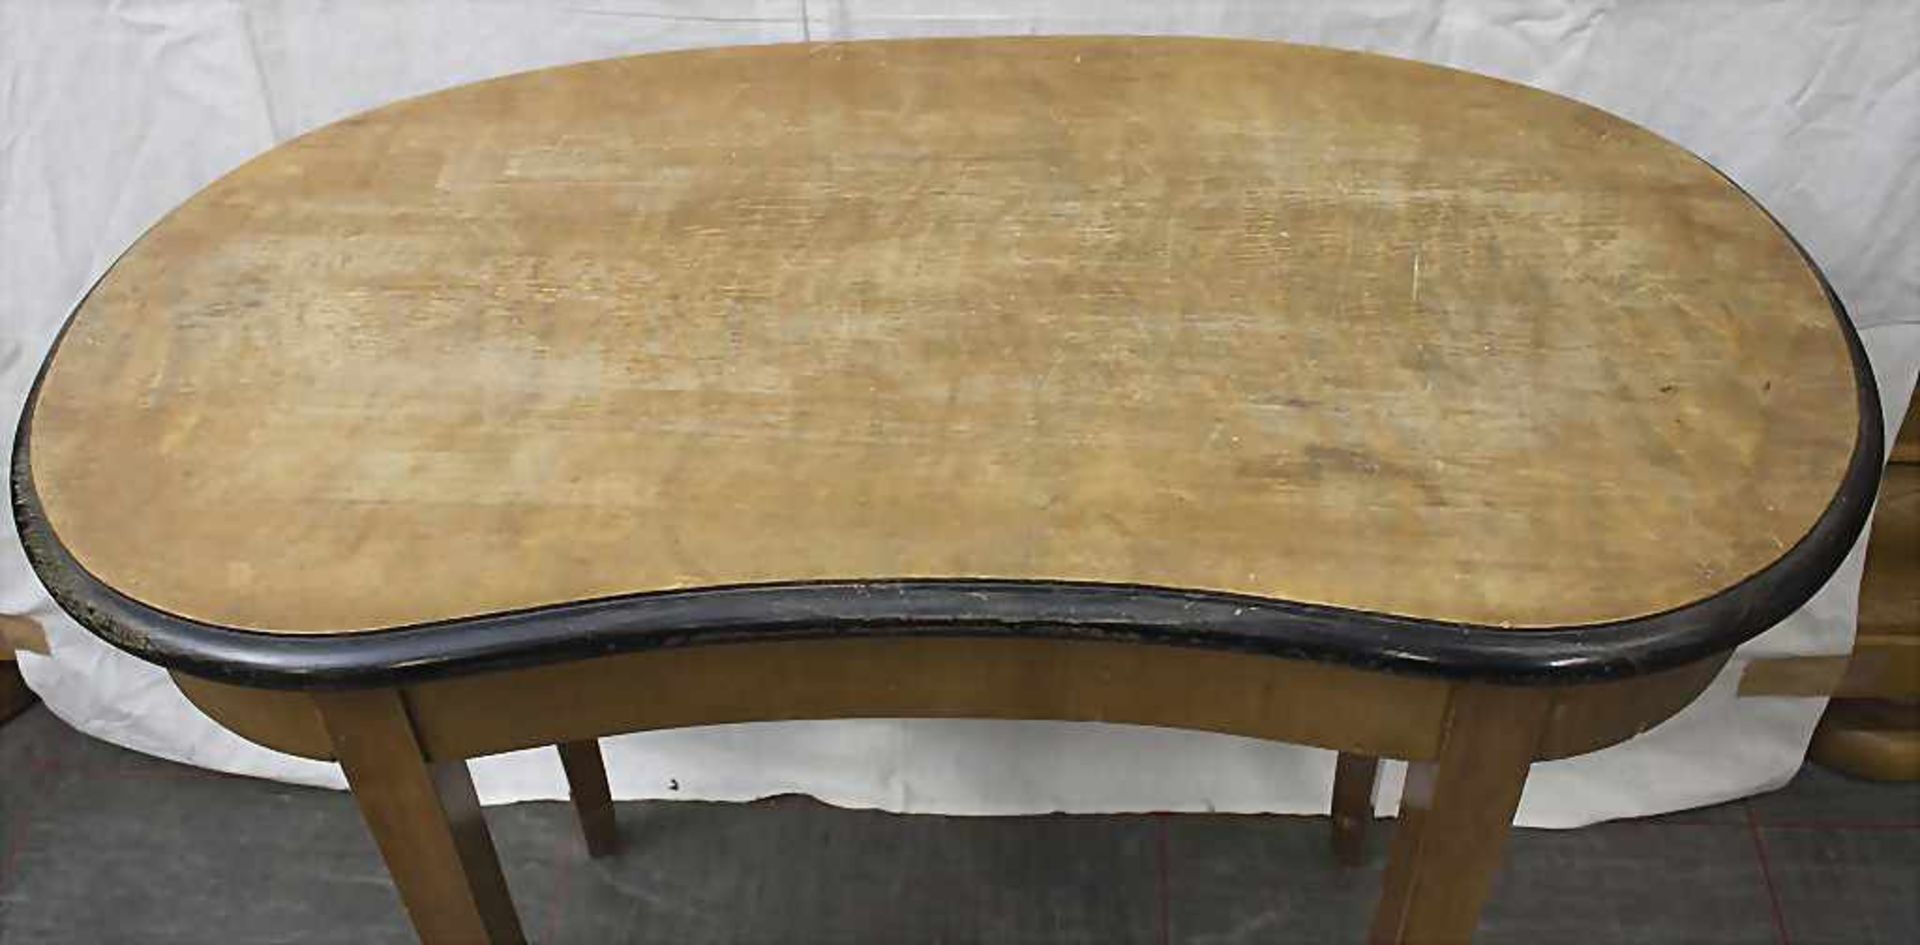 Nierenförmiger Tisch / A kidney-shaped table, 19. Jh.Material: Holz, poliert, ebonisierter - Bild 2 aus 3